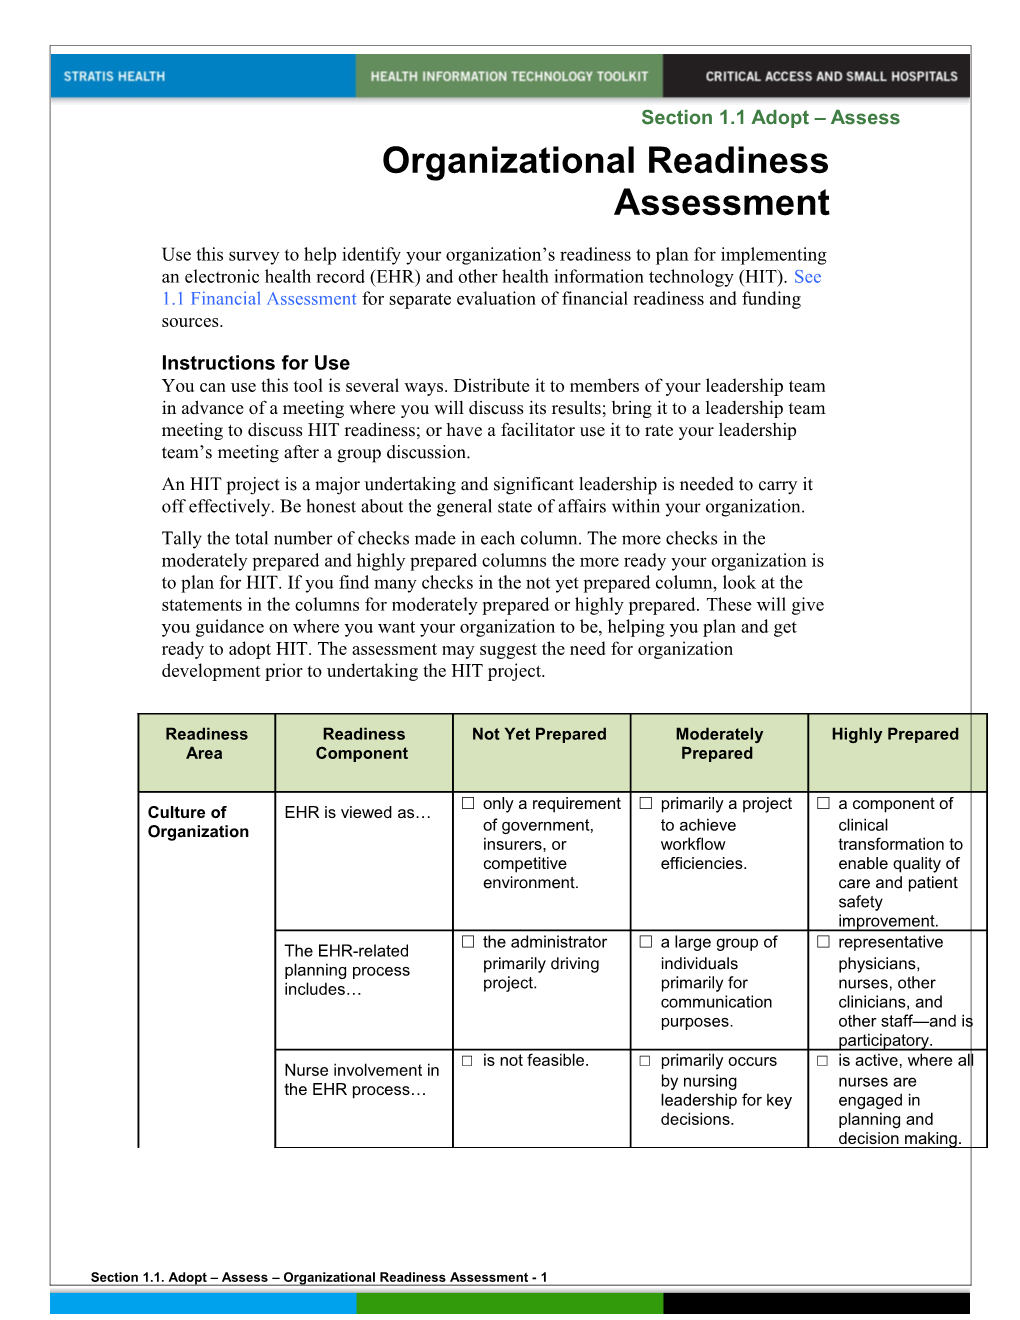 Section 1.1. Adopt Assess Organizational Readiness Assessment - 1